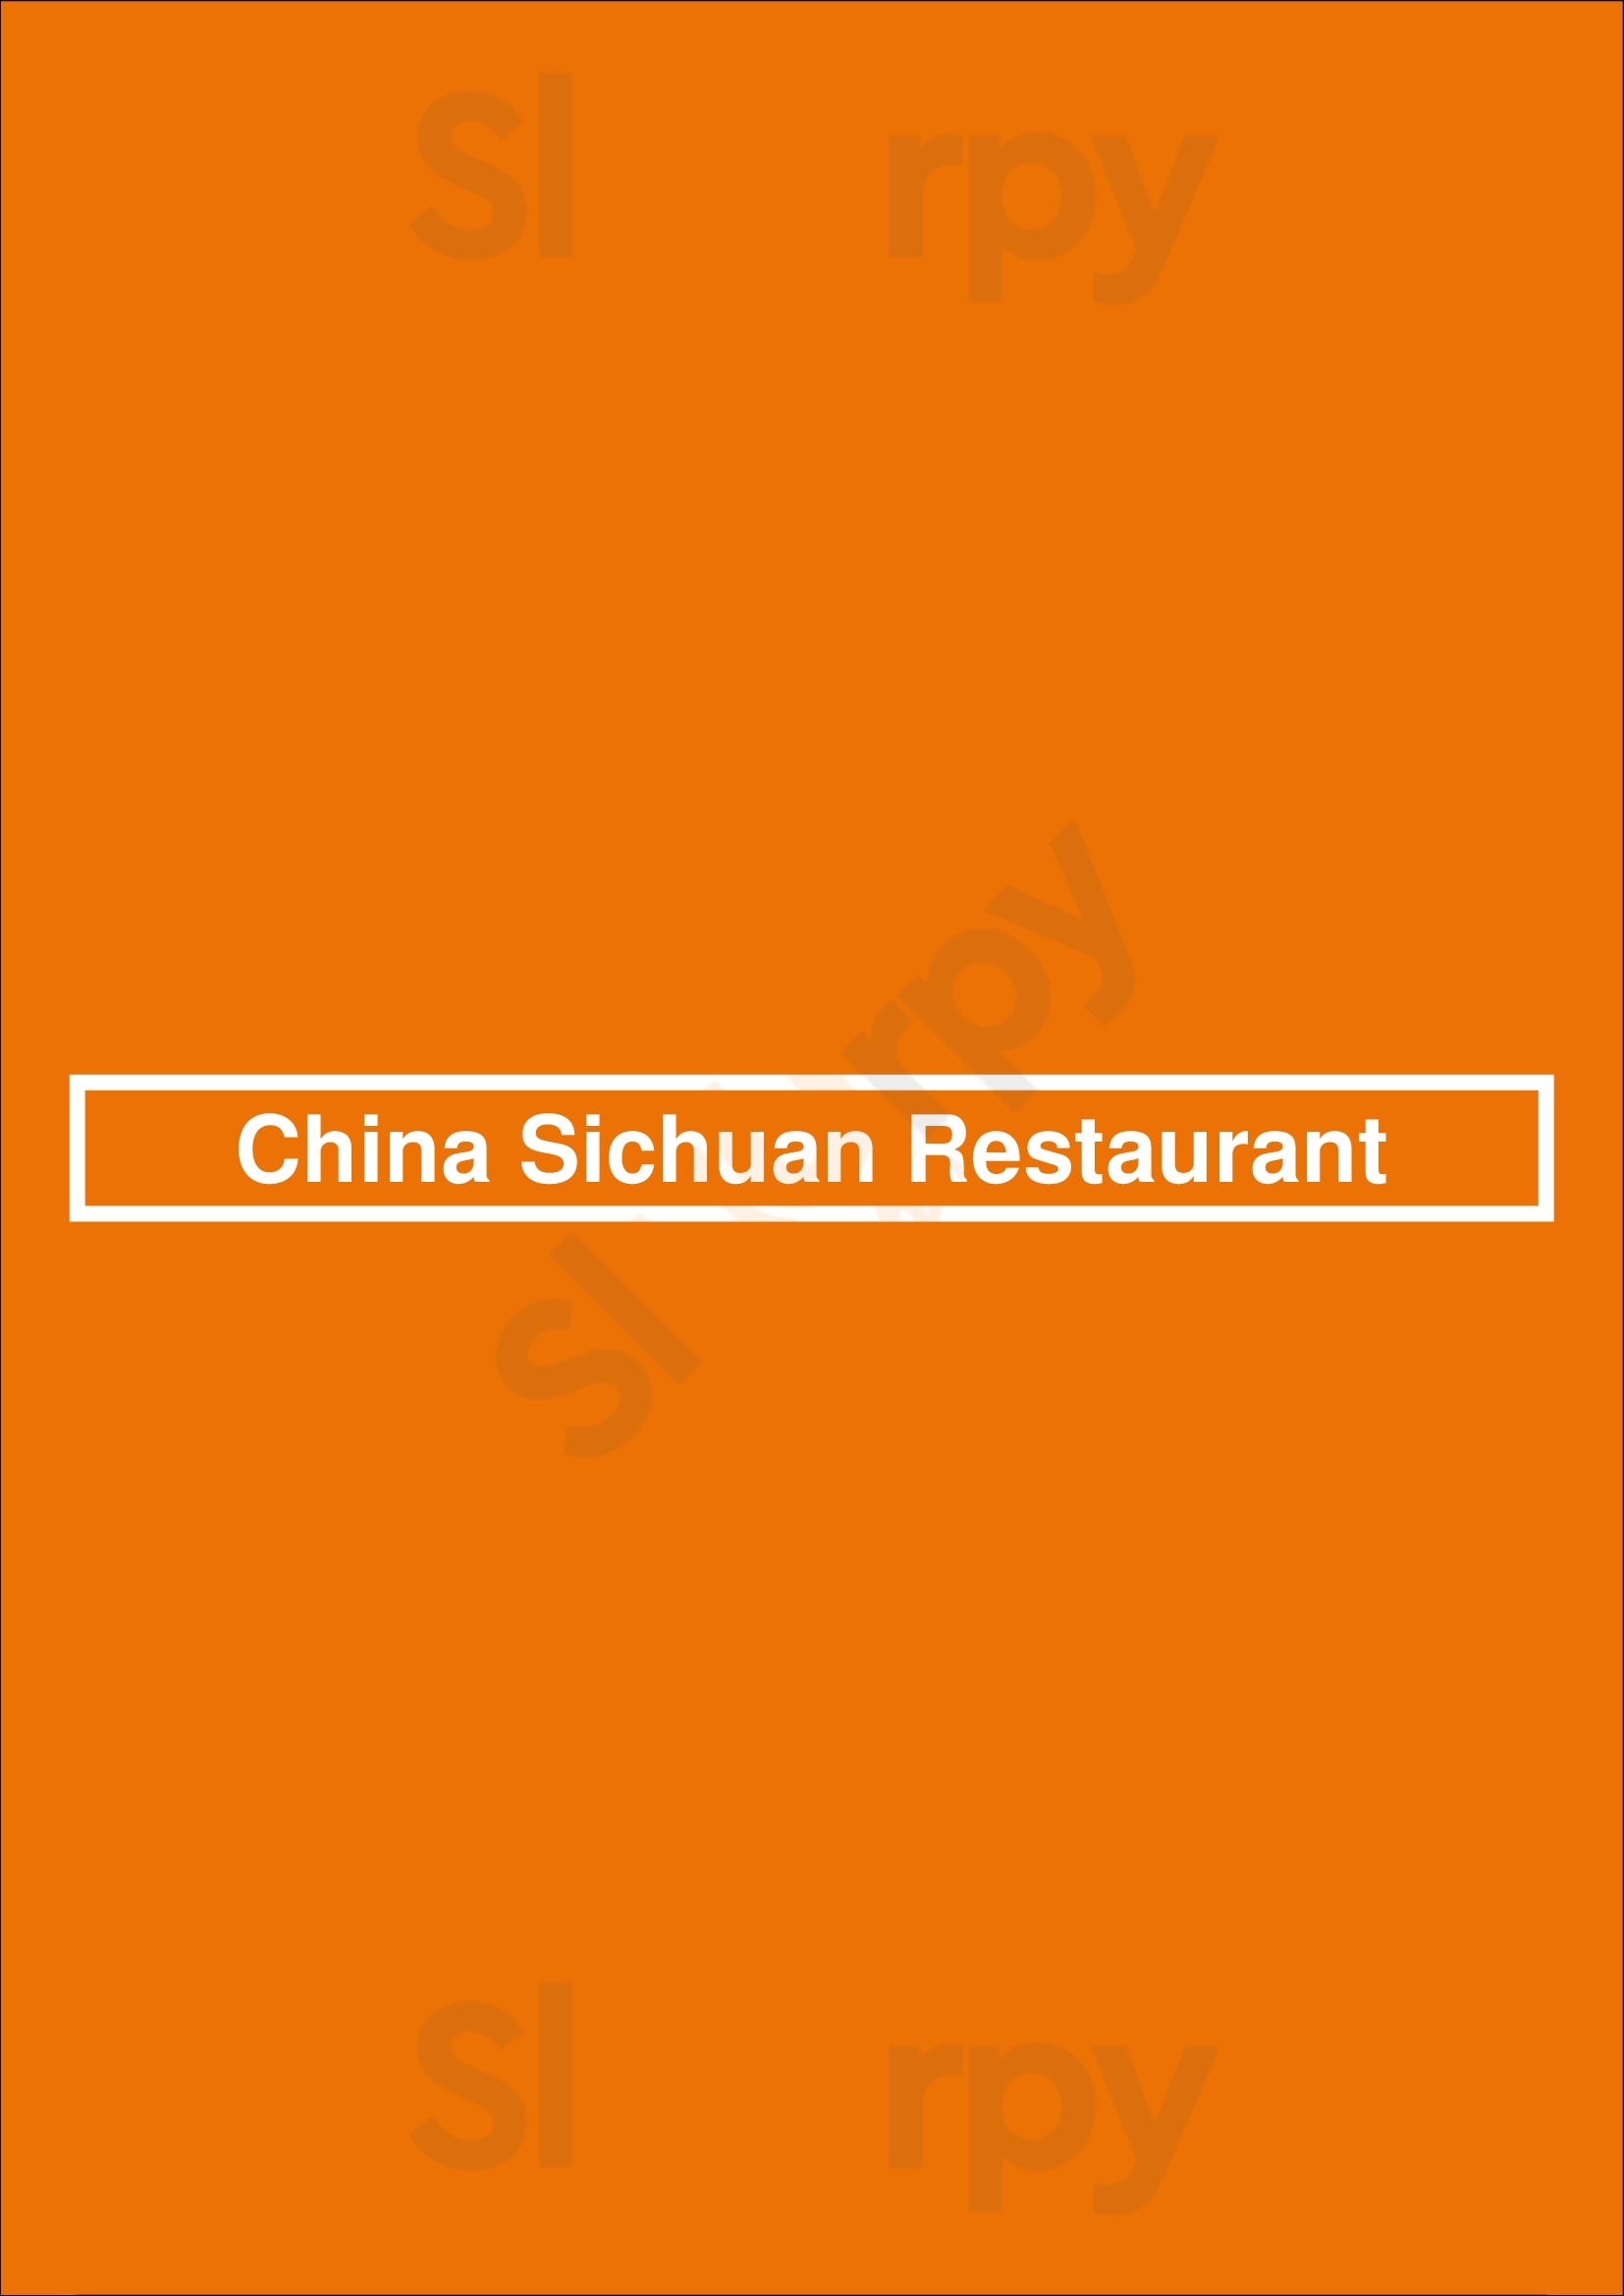 China Sichuan Restaurant Amsterdam Menu - 1